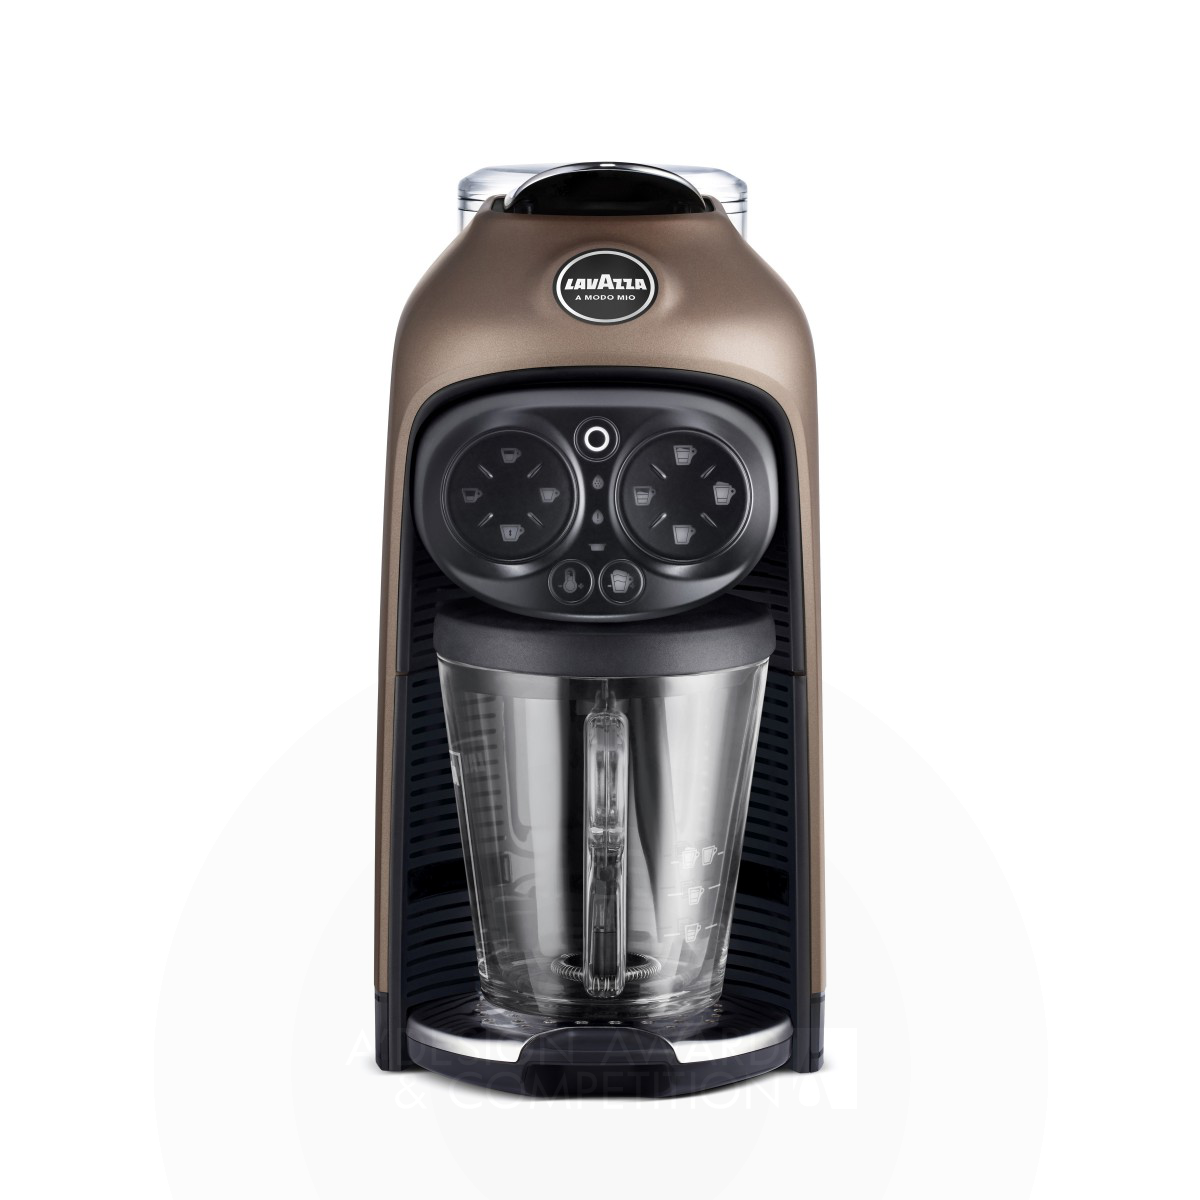 Lavazza Desea Coffee Machine by Florian Seidl Platinum Home Appliances Design Award Winner 2020 